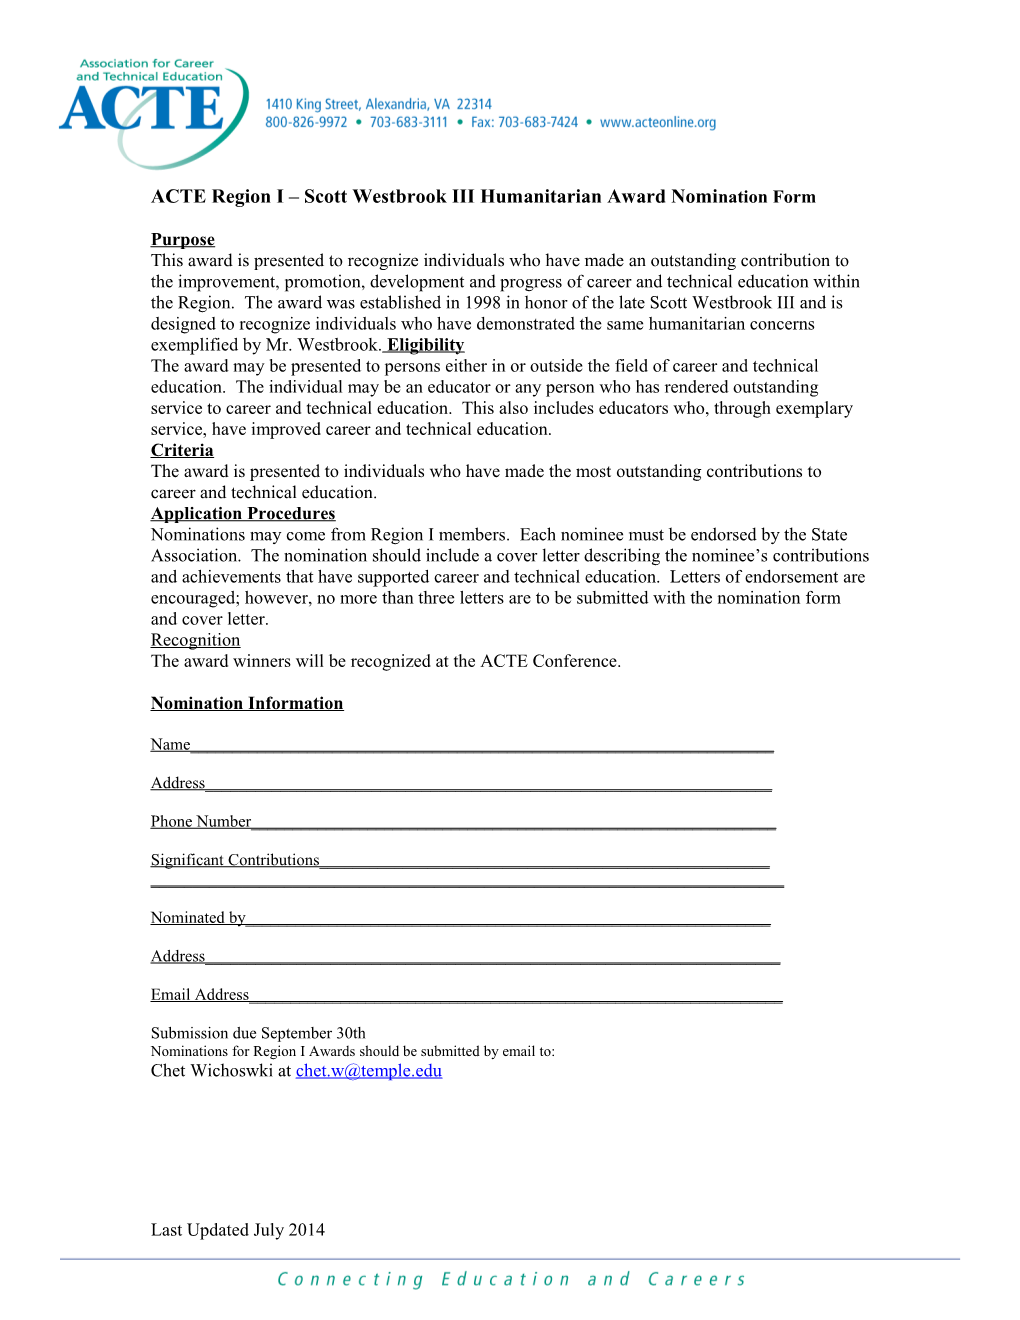 ACTE Region I Scott Westbrook III Humanitarian Award Nomination Form